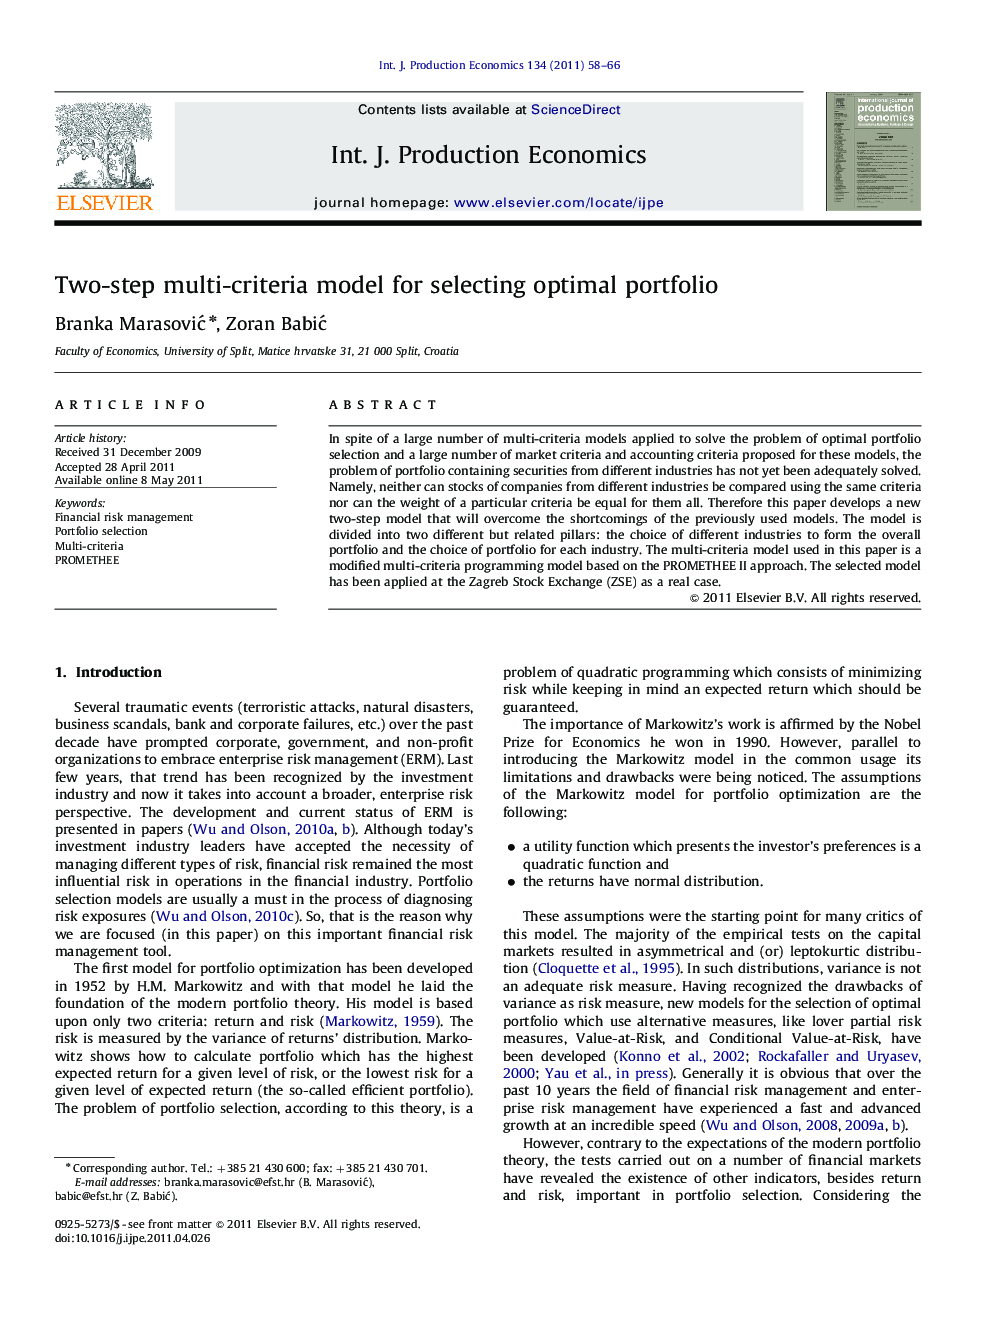 Two-step multi-criteria model for selecting optimal portfolio